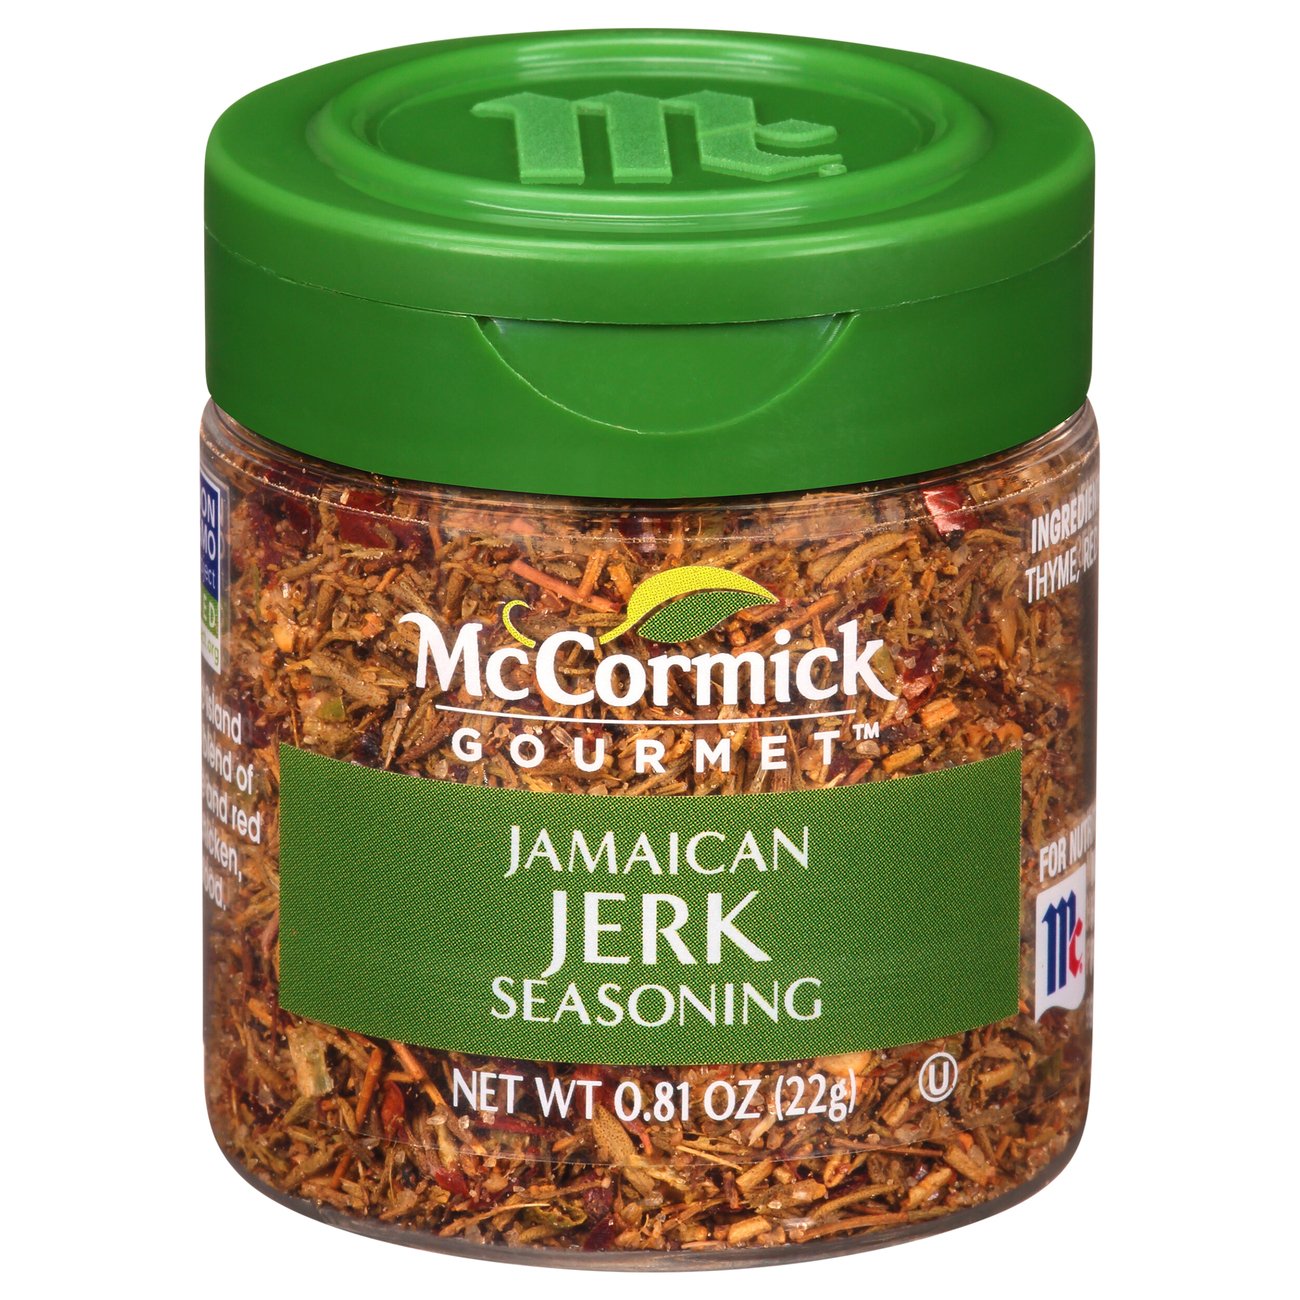 McCormick Gourmet Jamaican Jerk Seasoning - Shop Herbs & Spices at H-E-B